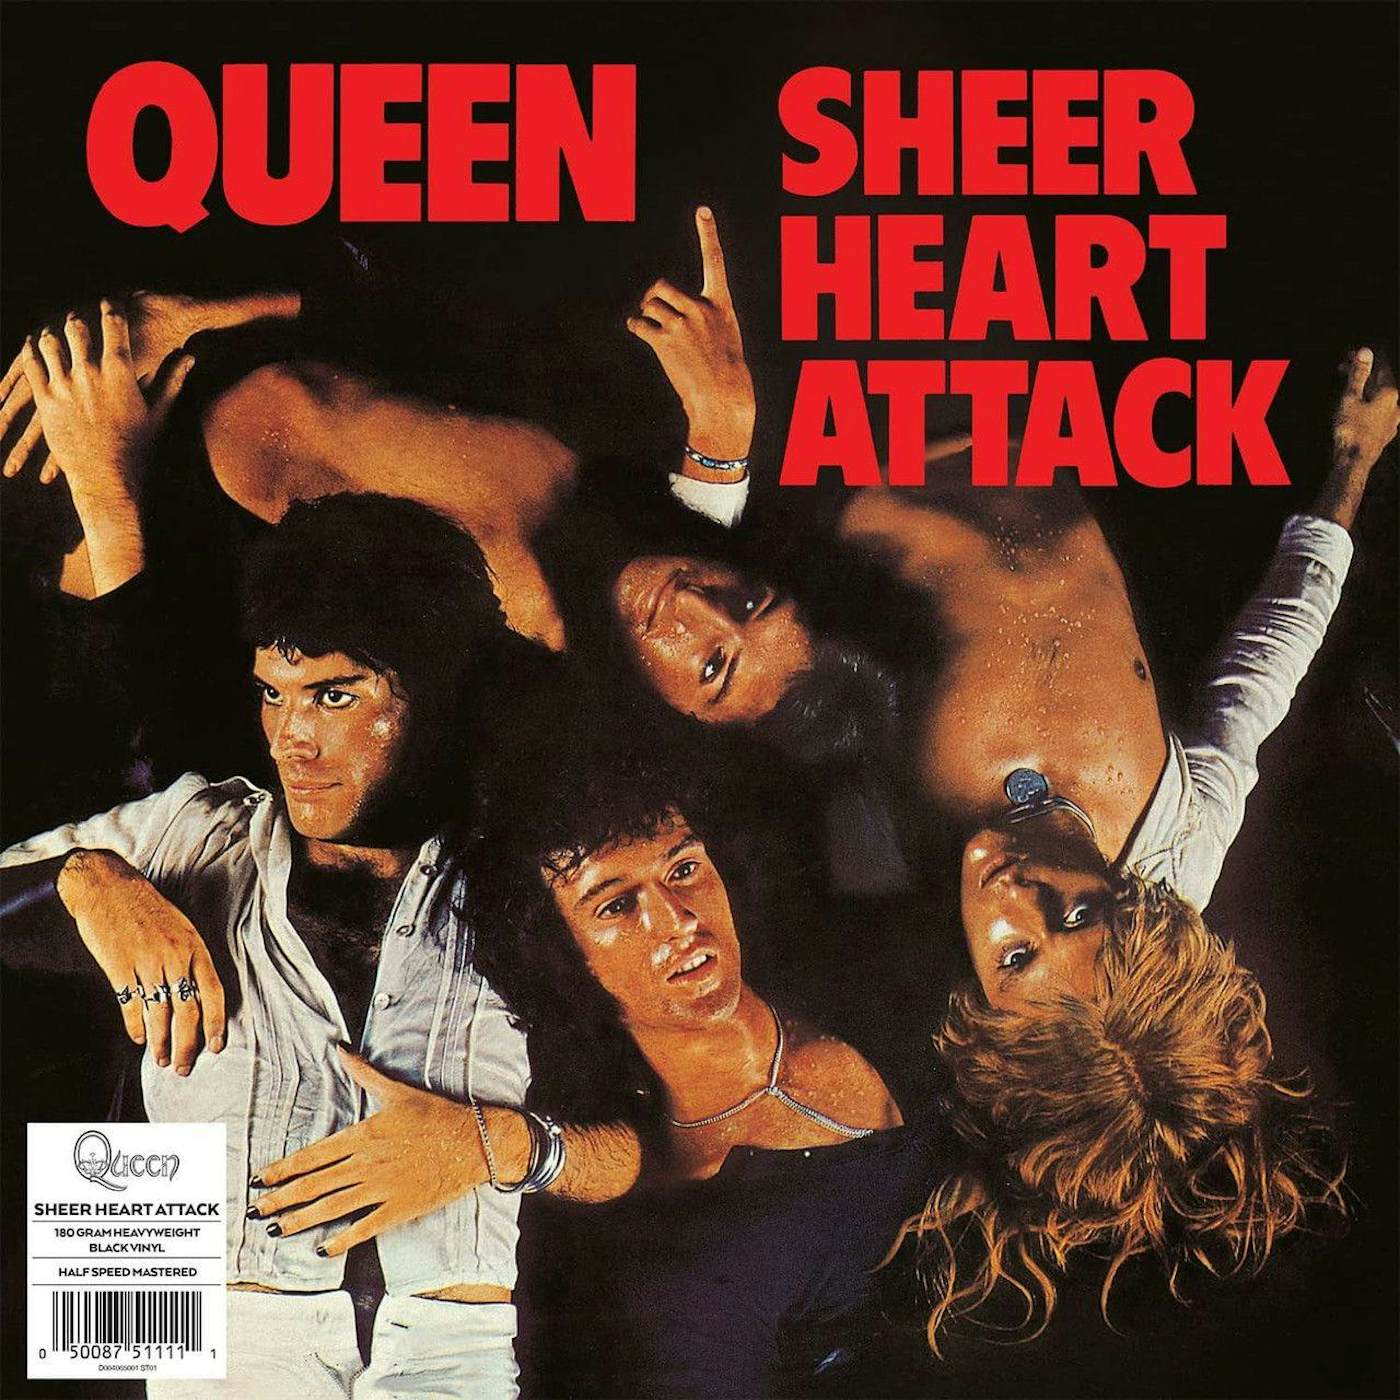 Queen Sheer Heart Attack Vinyl Record